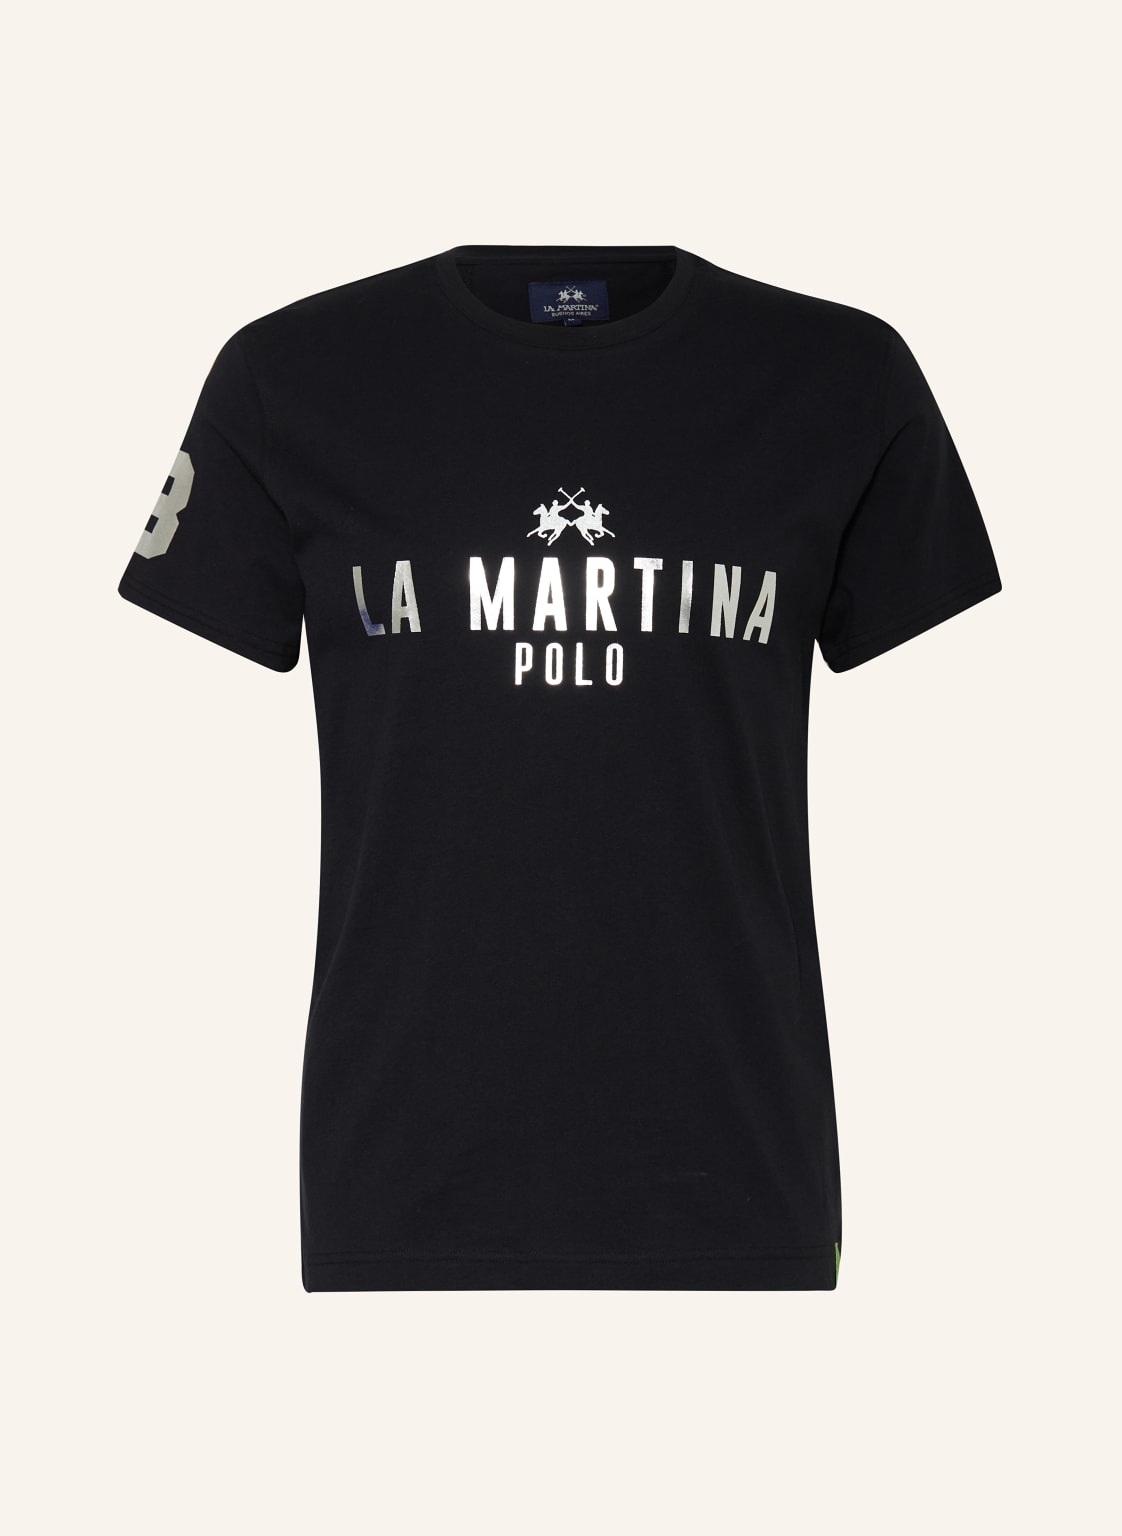 La Martina T-Shirt schwarz von LA MARTINA